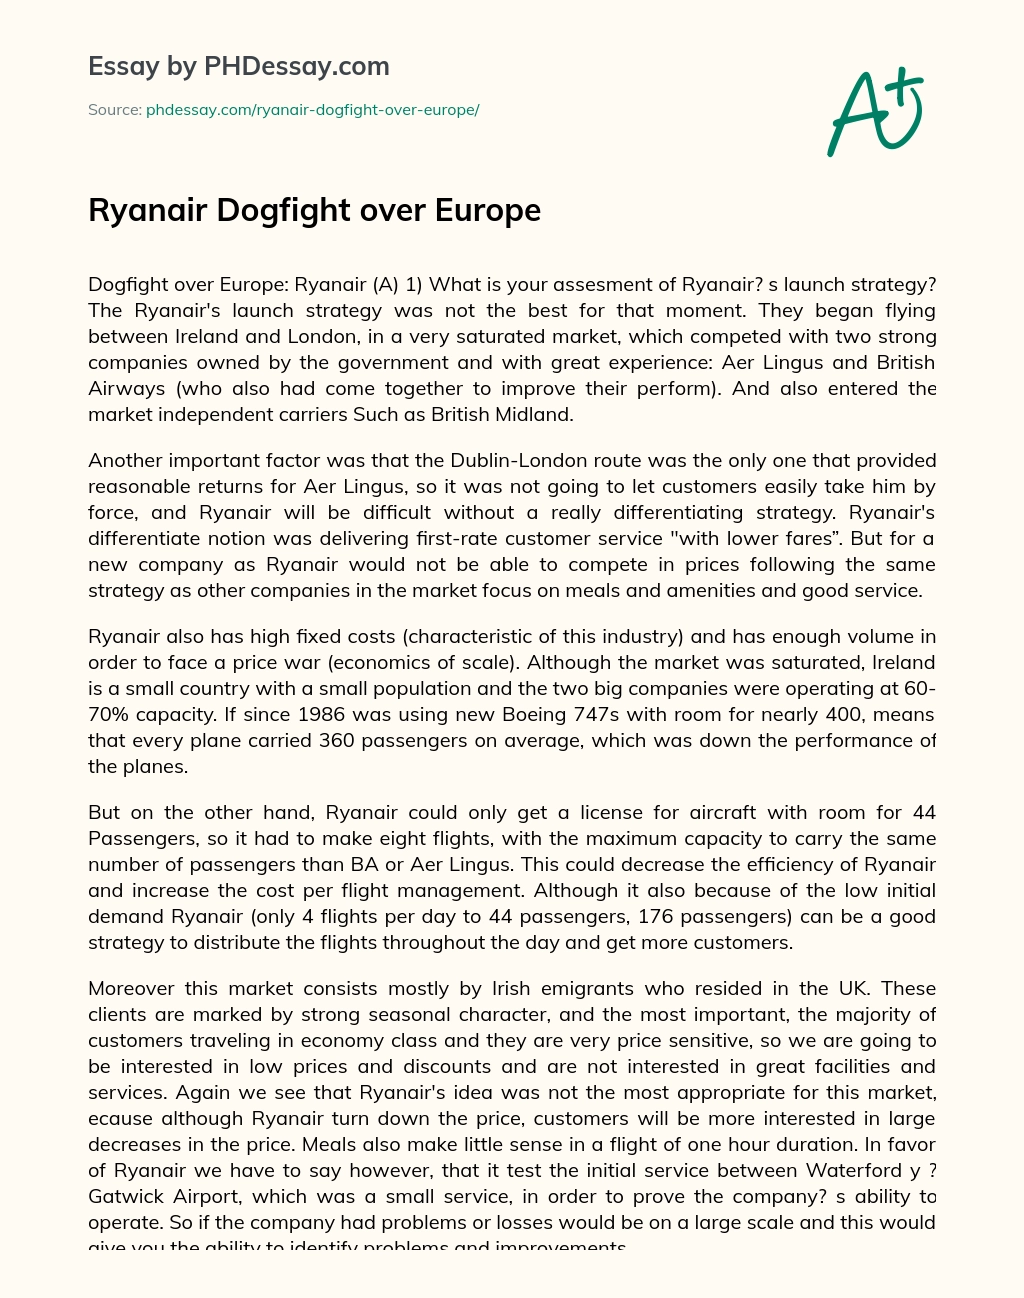 Ryanair Dogfight over Europe essay